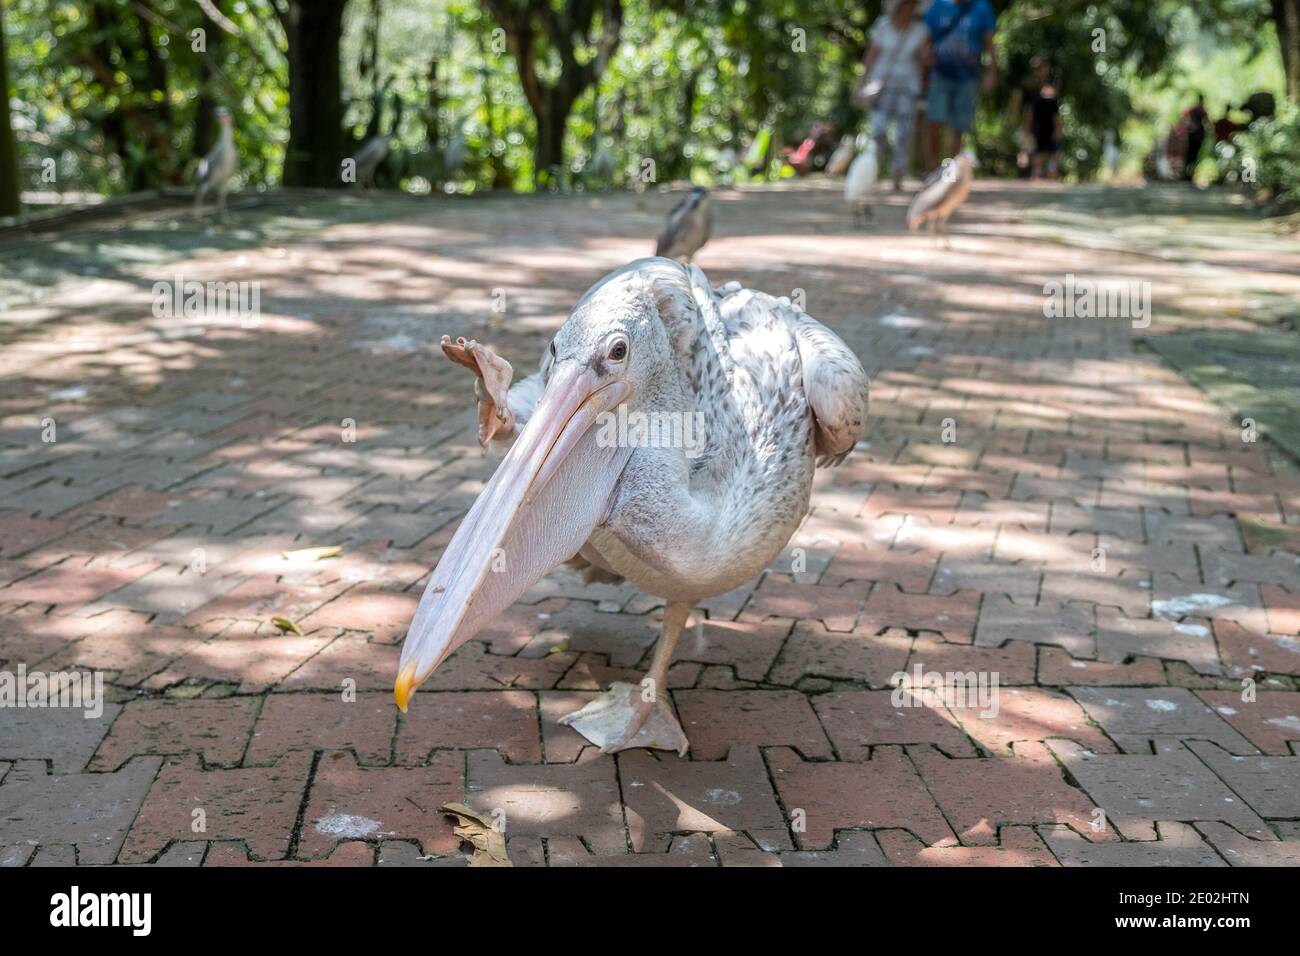 MALAYSIA, KUALA LUMPUR, 07. JANUAR 2018: Nahaufnahme eines braunen Pelikans, der auf einer Straße im Kuala Lumpur Bird Park unterwegs ist Stockfoto